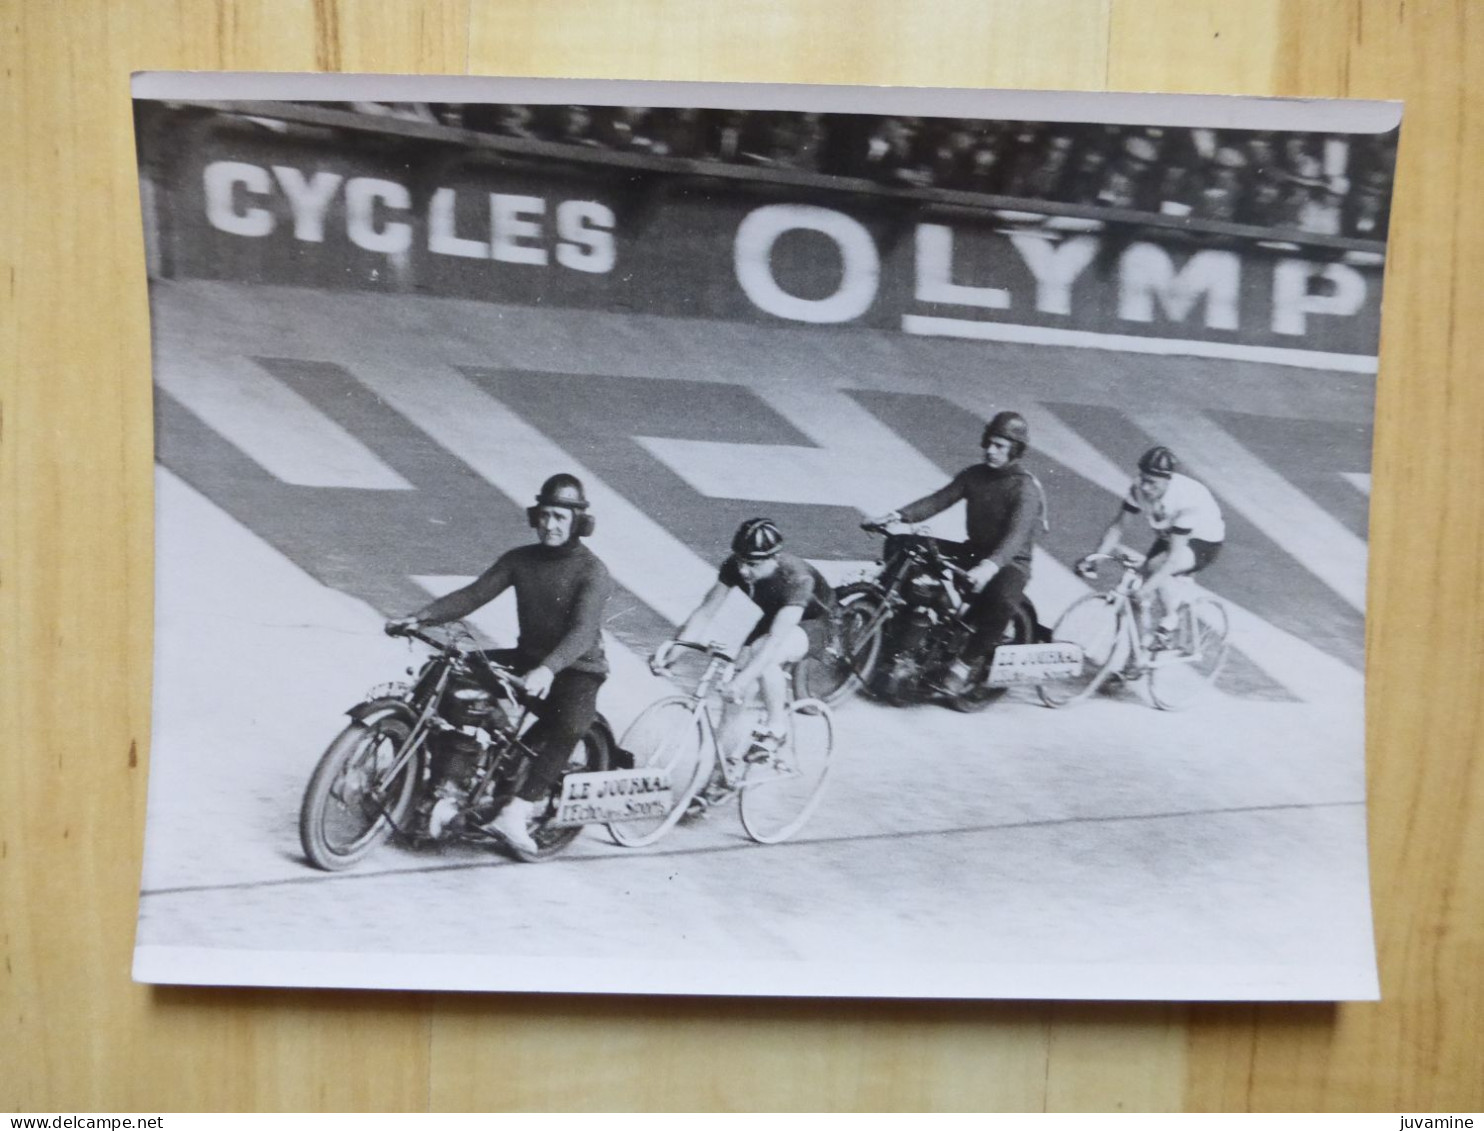 STADE BUFFALO 1934  - SELECTION CRITERIUM DES AS - L'ALLEMAND EHMER DOUBLE FAUDET - PHOTOGRAPHIE CYCLISME CYCLISTE SPORT - Cycling